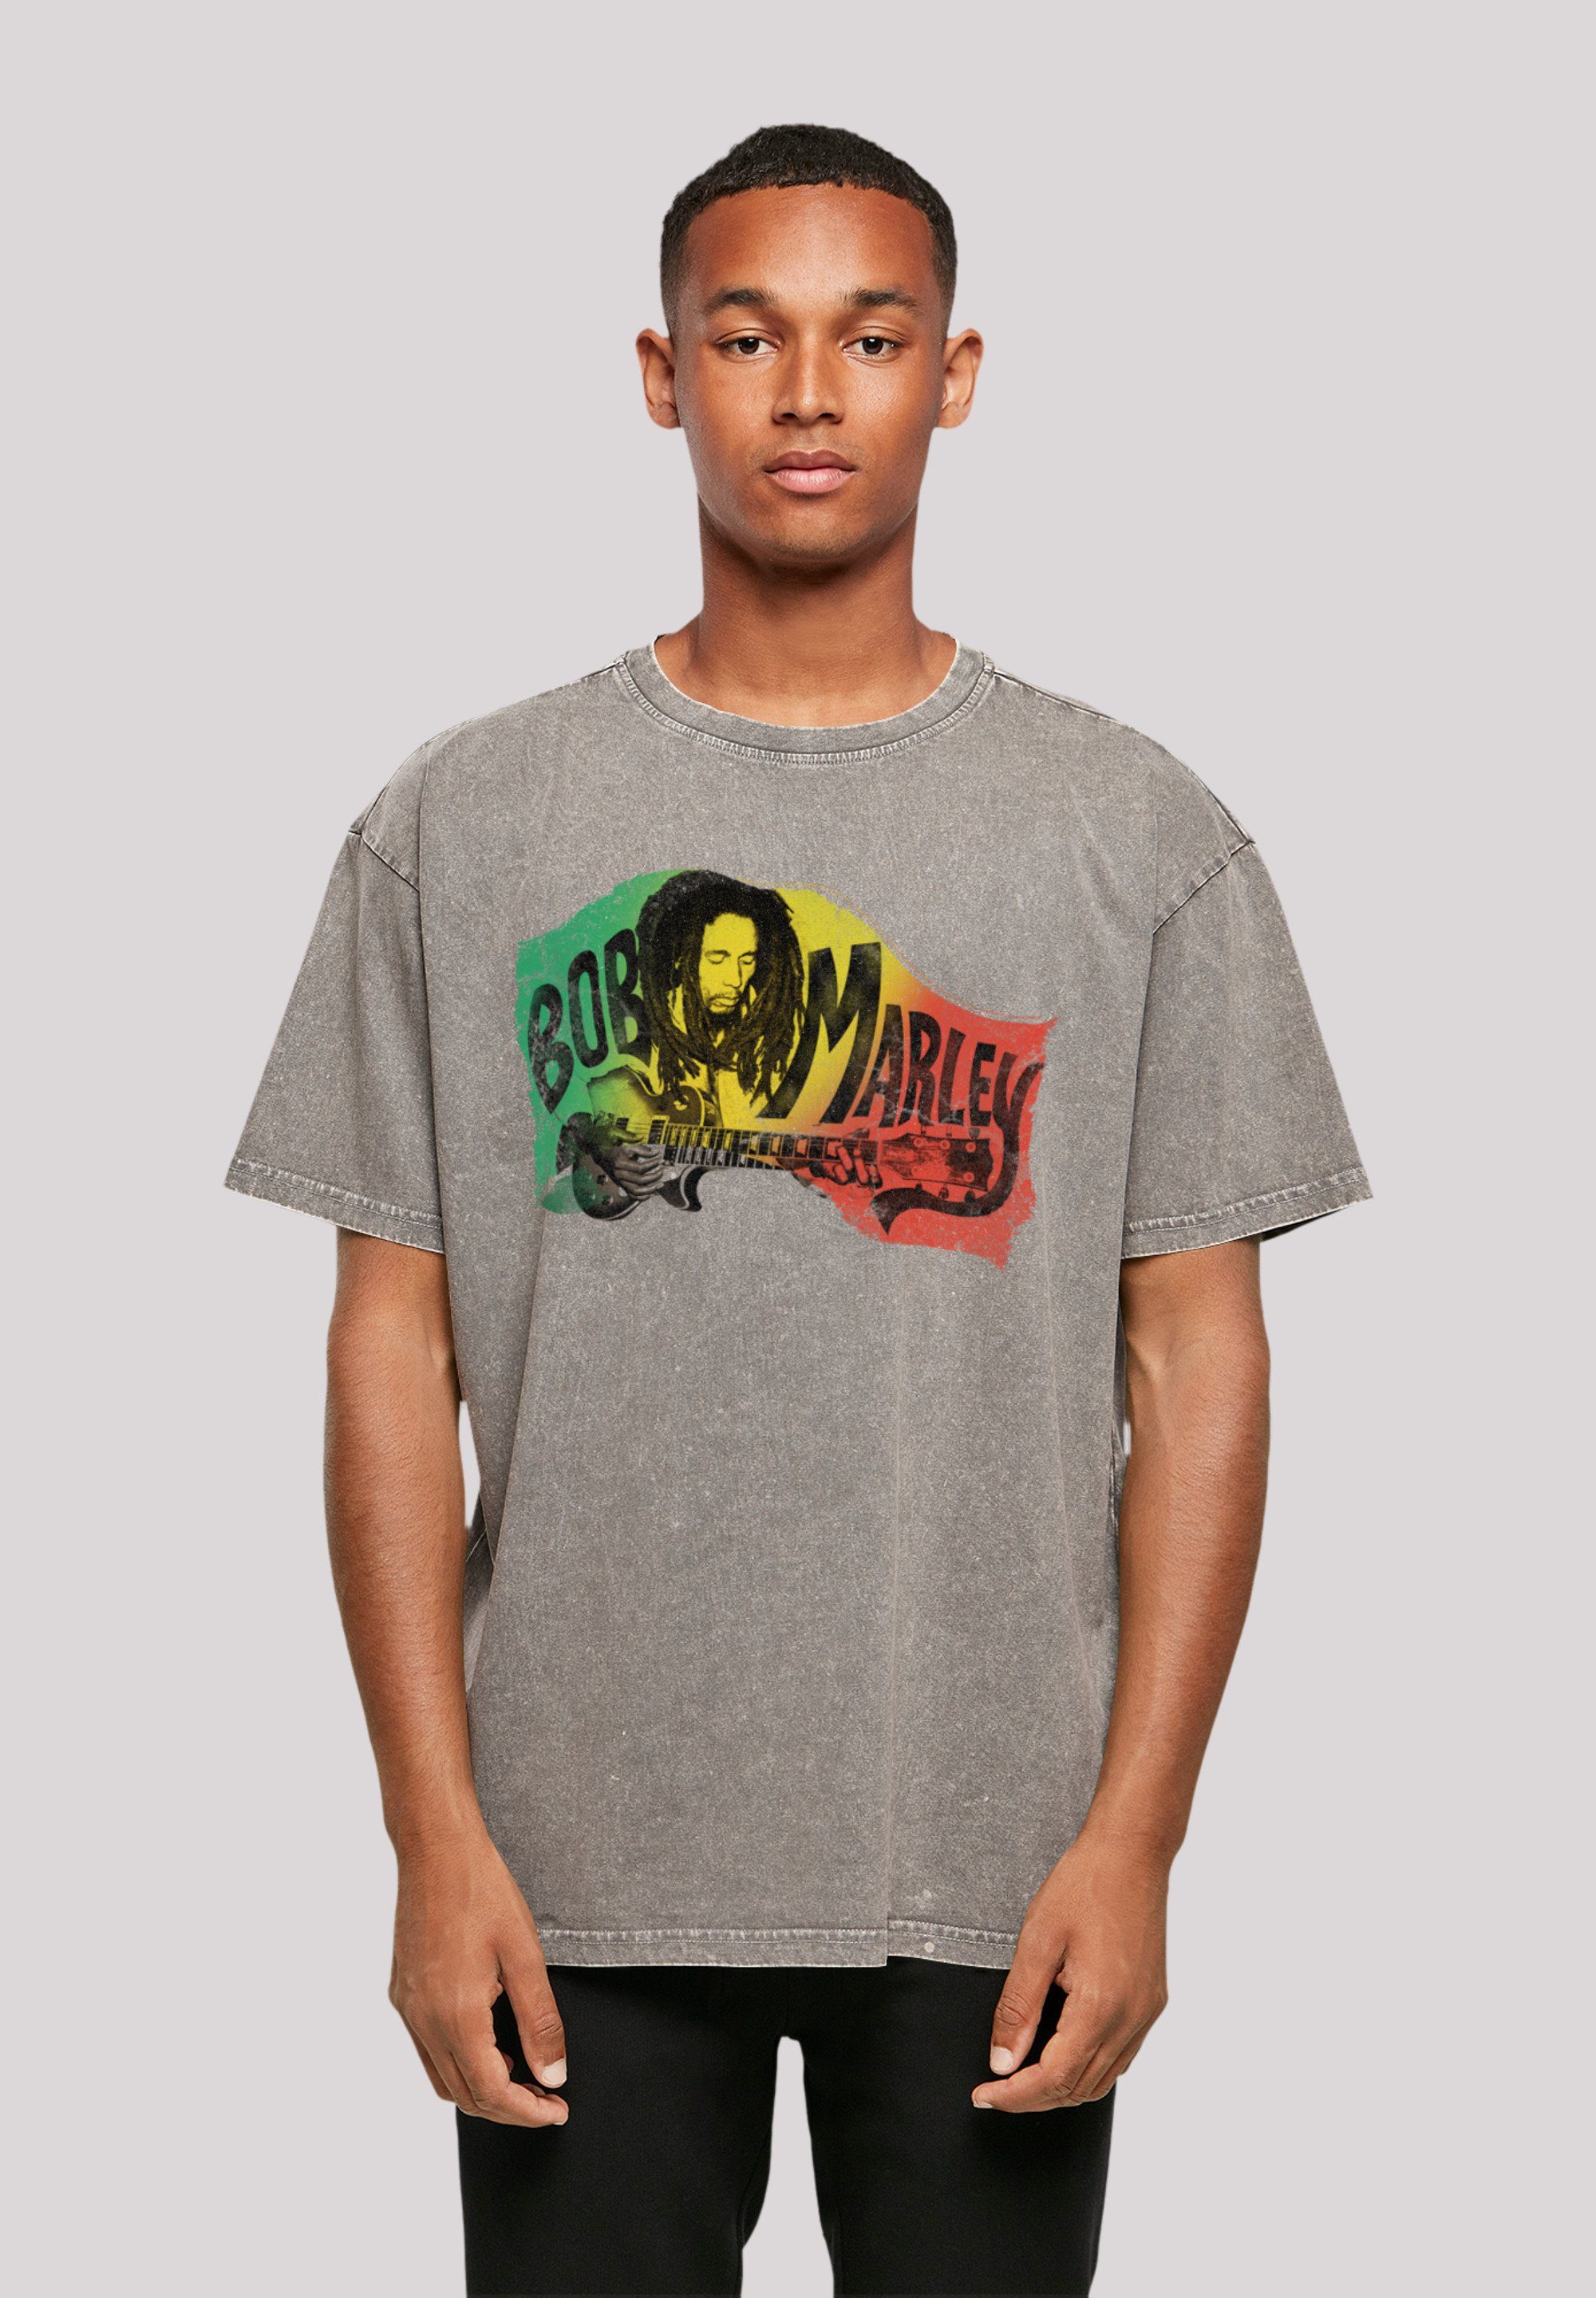 Music Bob Asphalt Premium Rock Off Qualität, Marley T-Shirt F4NT4STIC By Reggae Musik, Chords